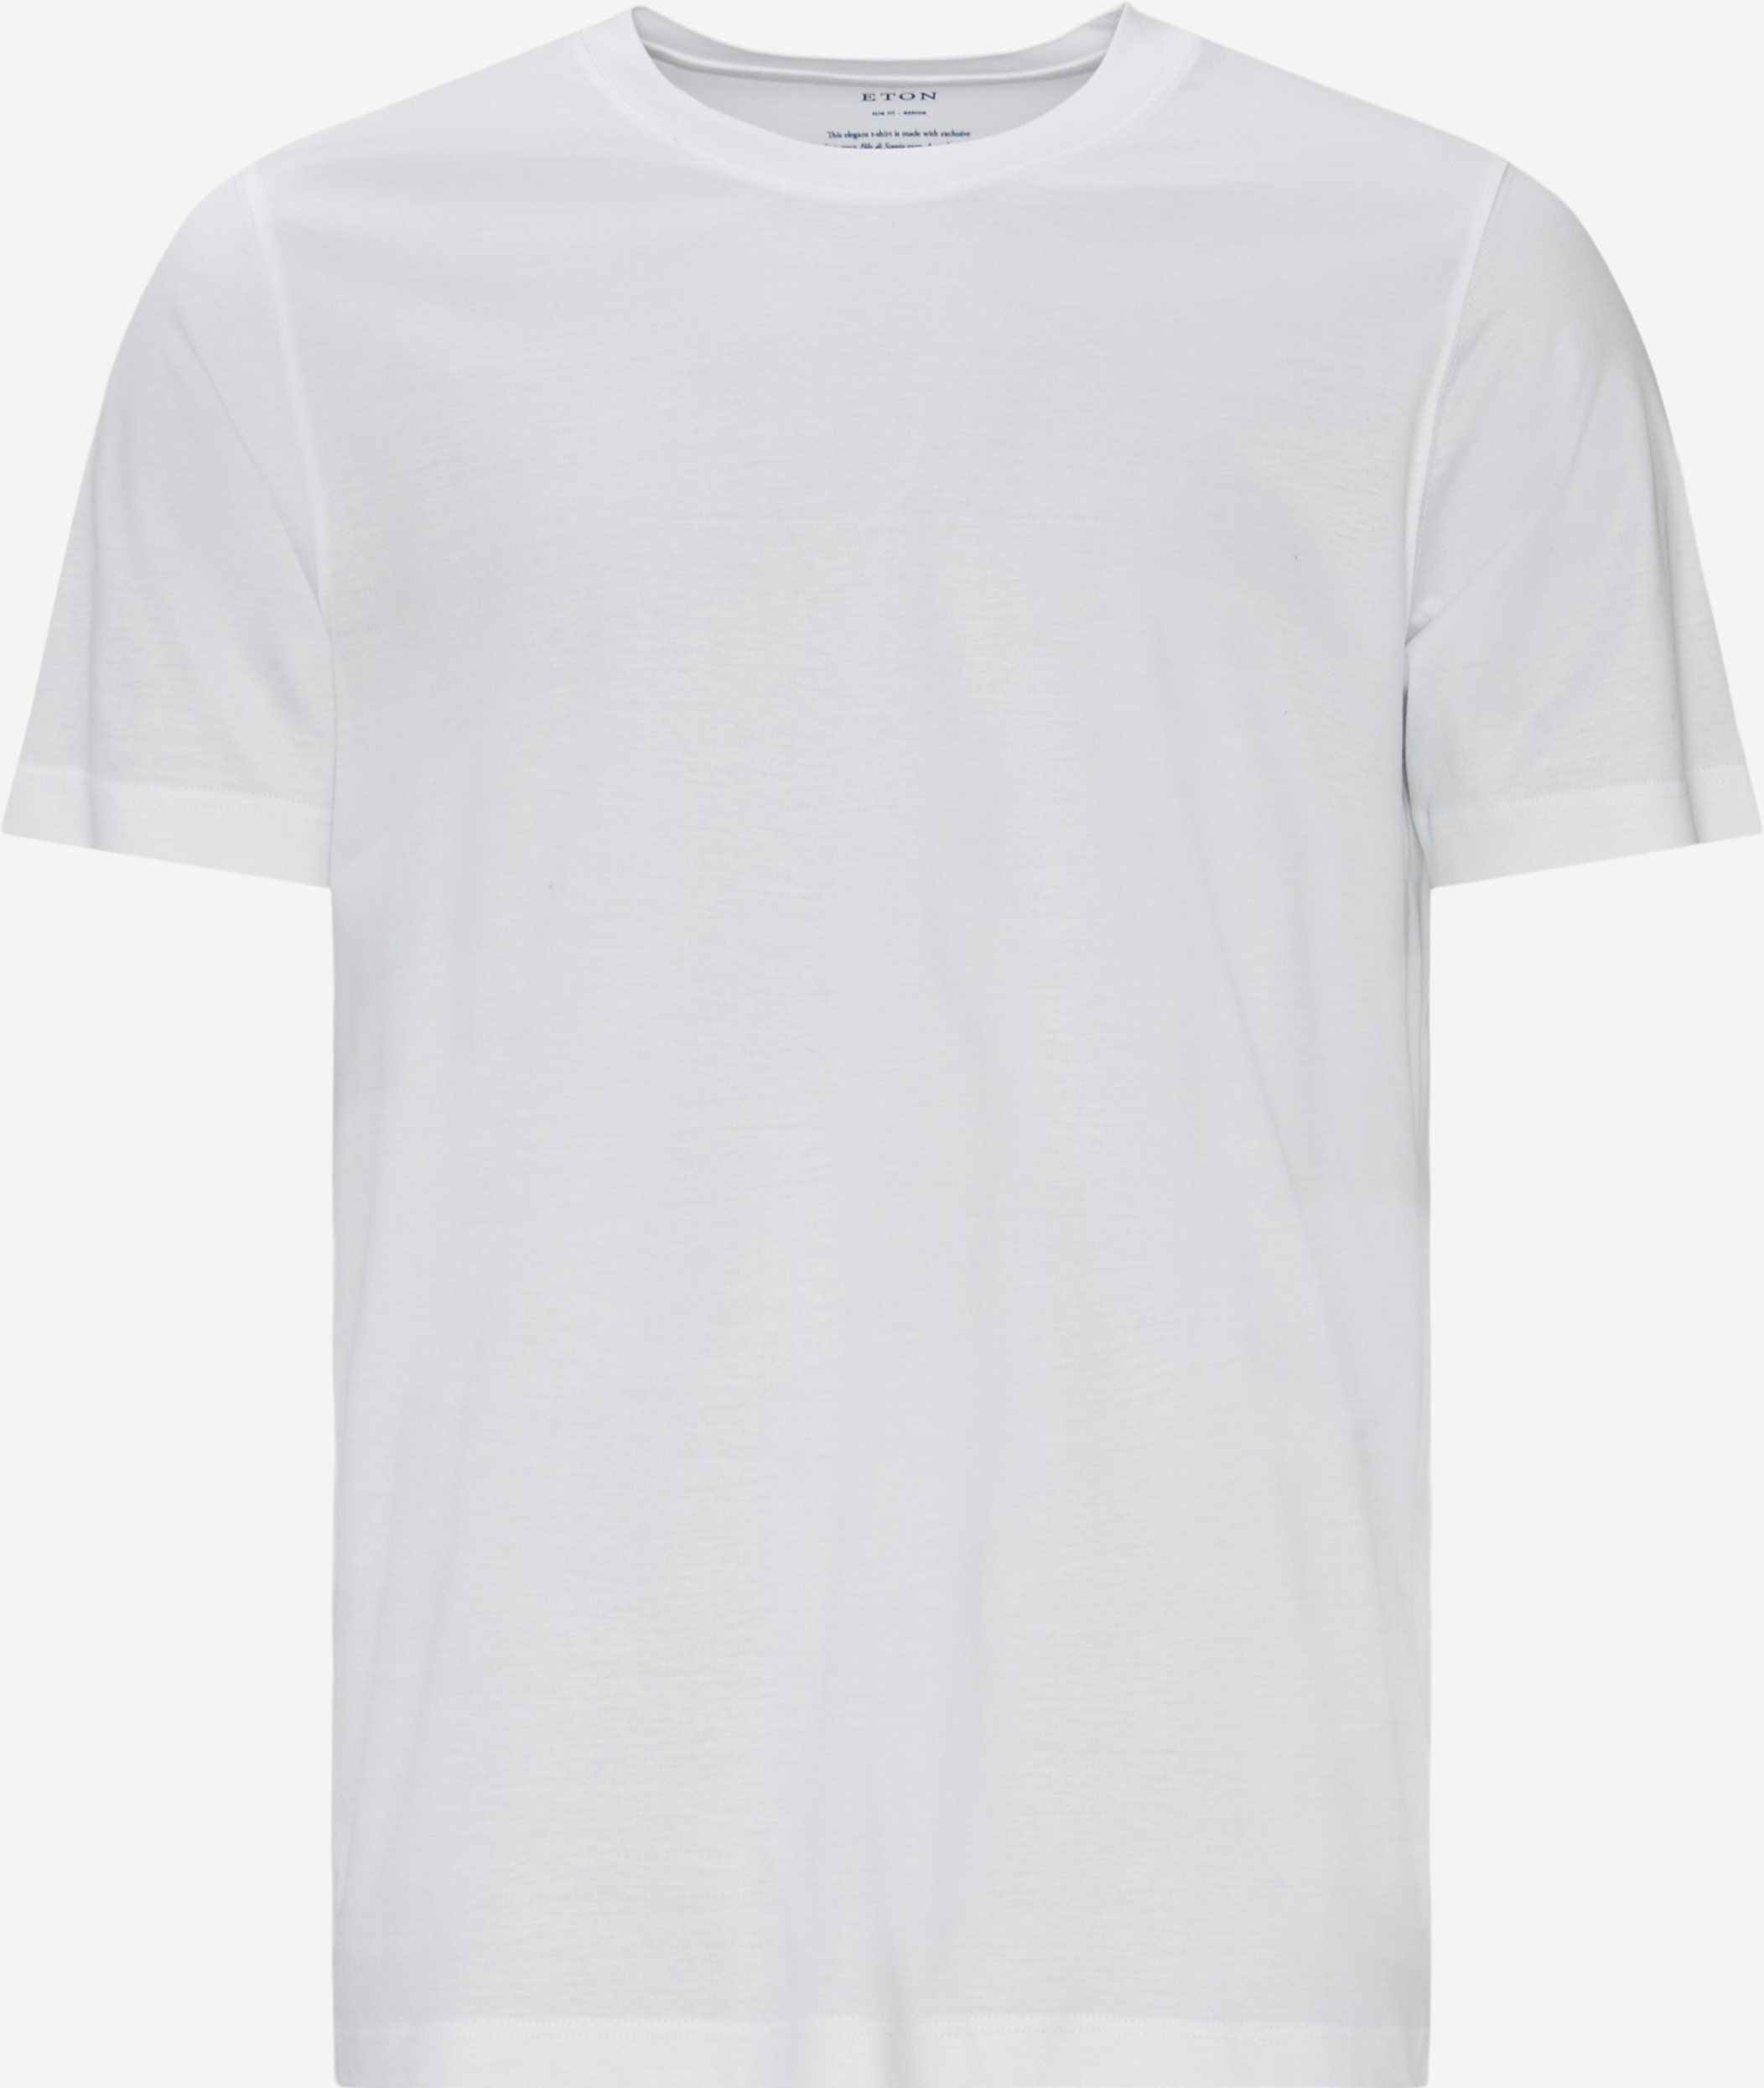 T-shirts - Slim fit - White